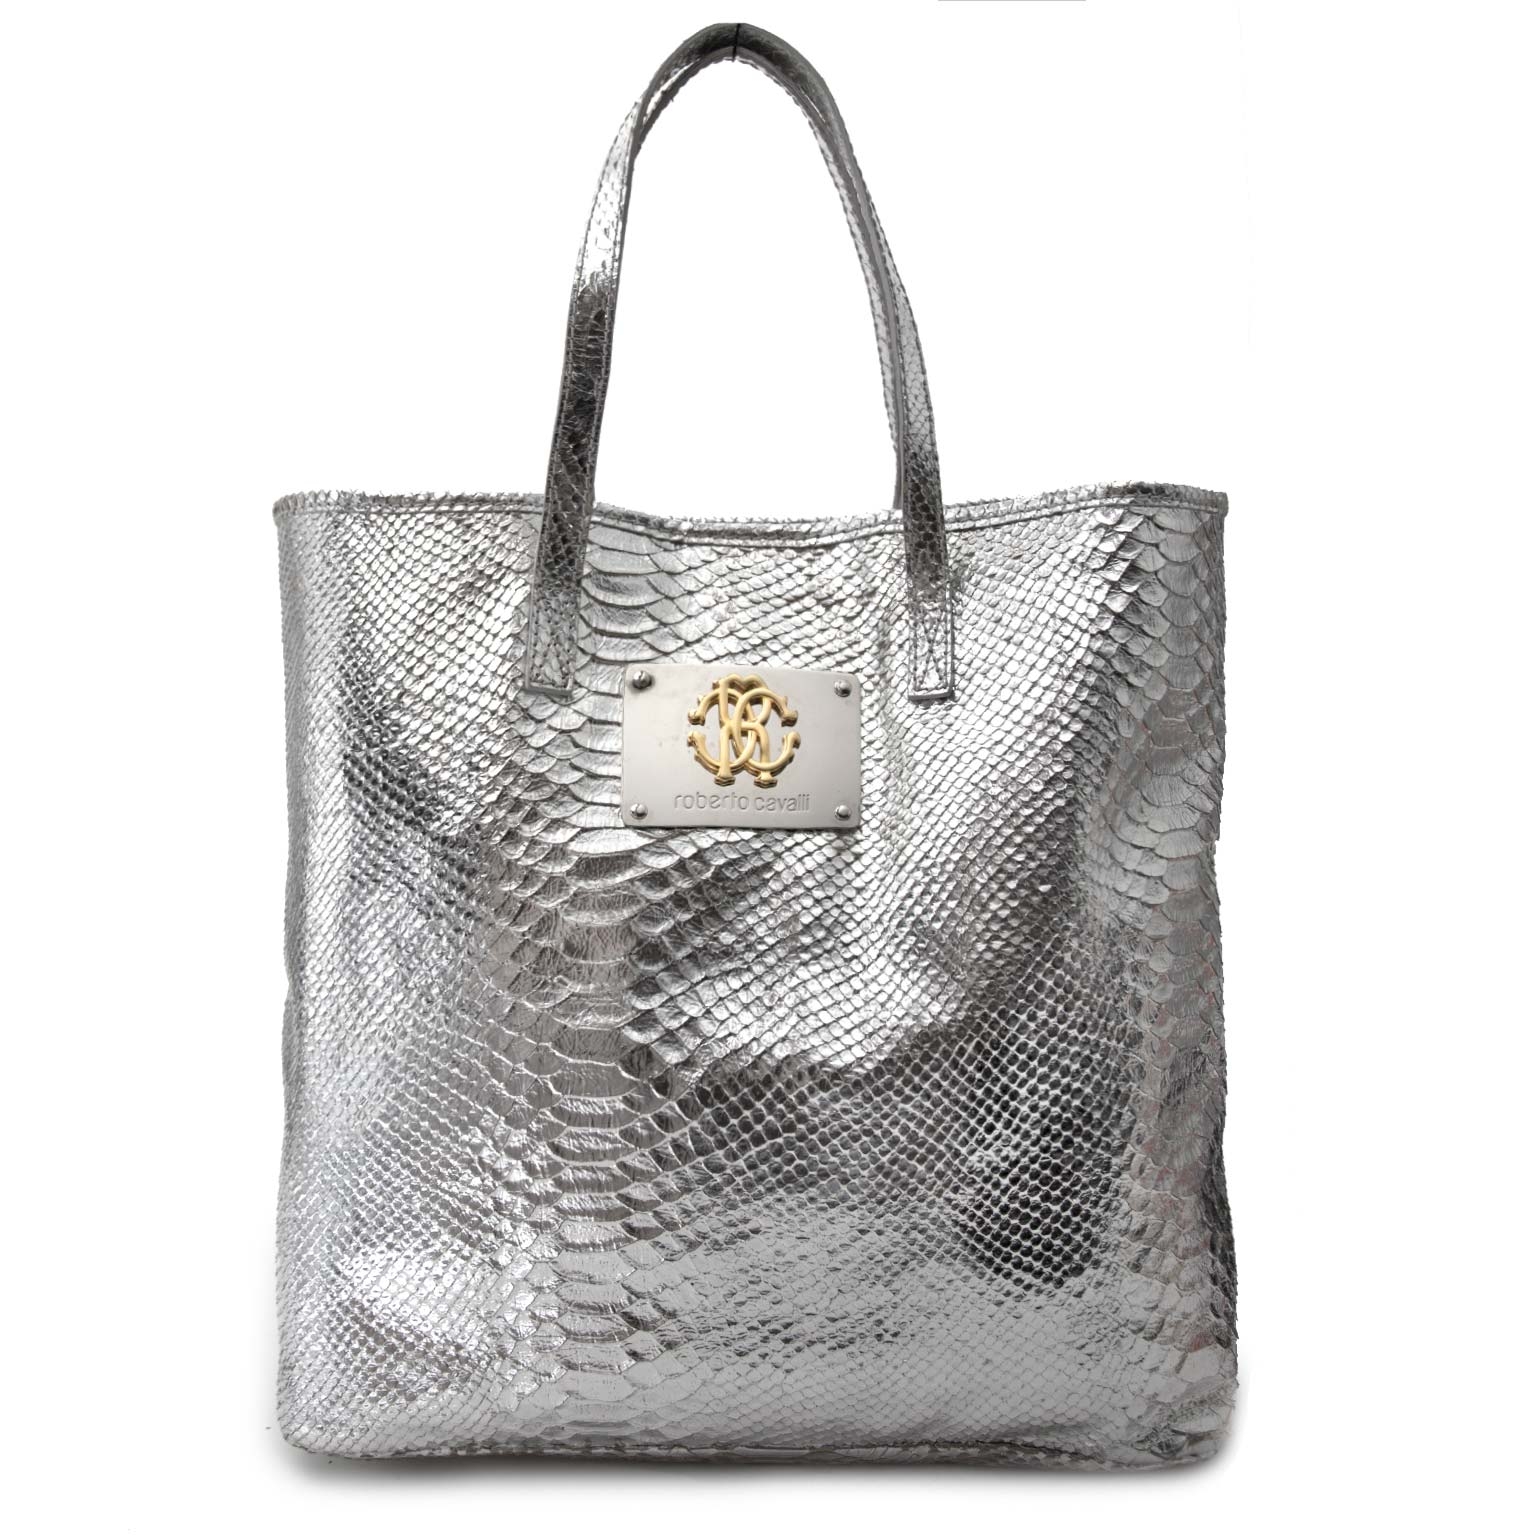 ROBERTO CAVALLI HXLPAY B01 Black/White Shoulder Bag for Womens: Handbags:  Amazon.com